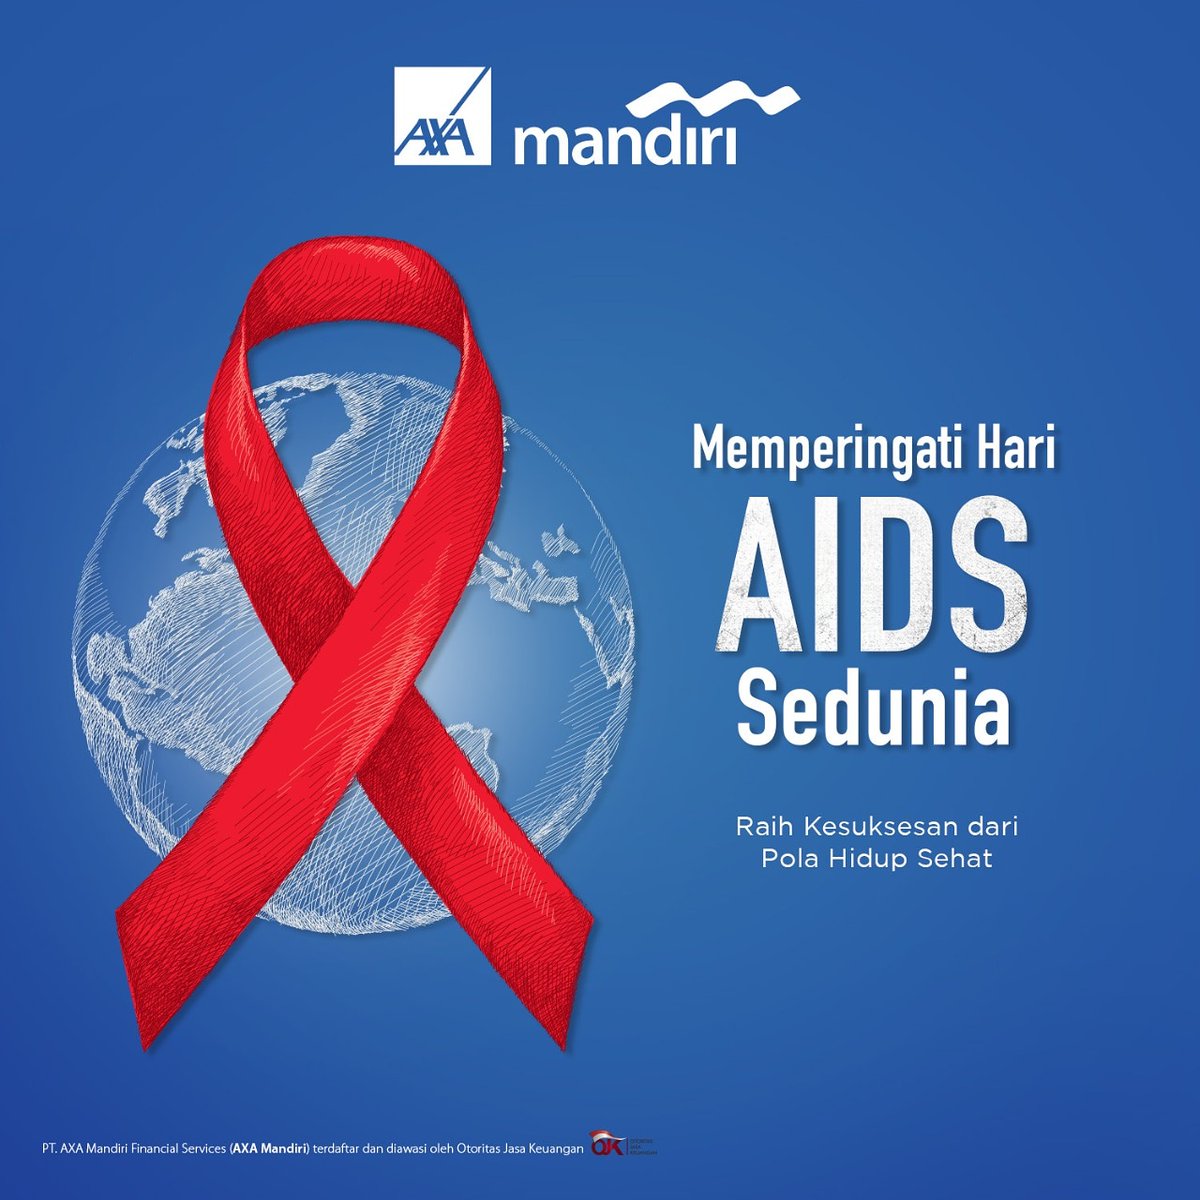 Memperingati Hari AIDS Sedunia. Mari kita tingkatkan kesadaran dsn kepedulian sedari dini terhadap HIV/AIDS. Save your self, save the world.